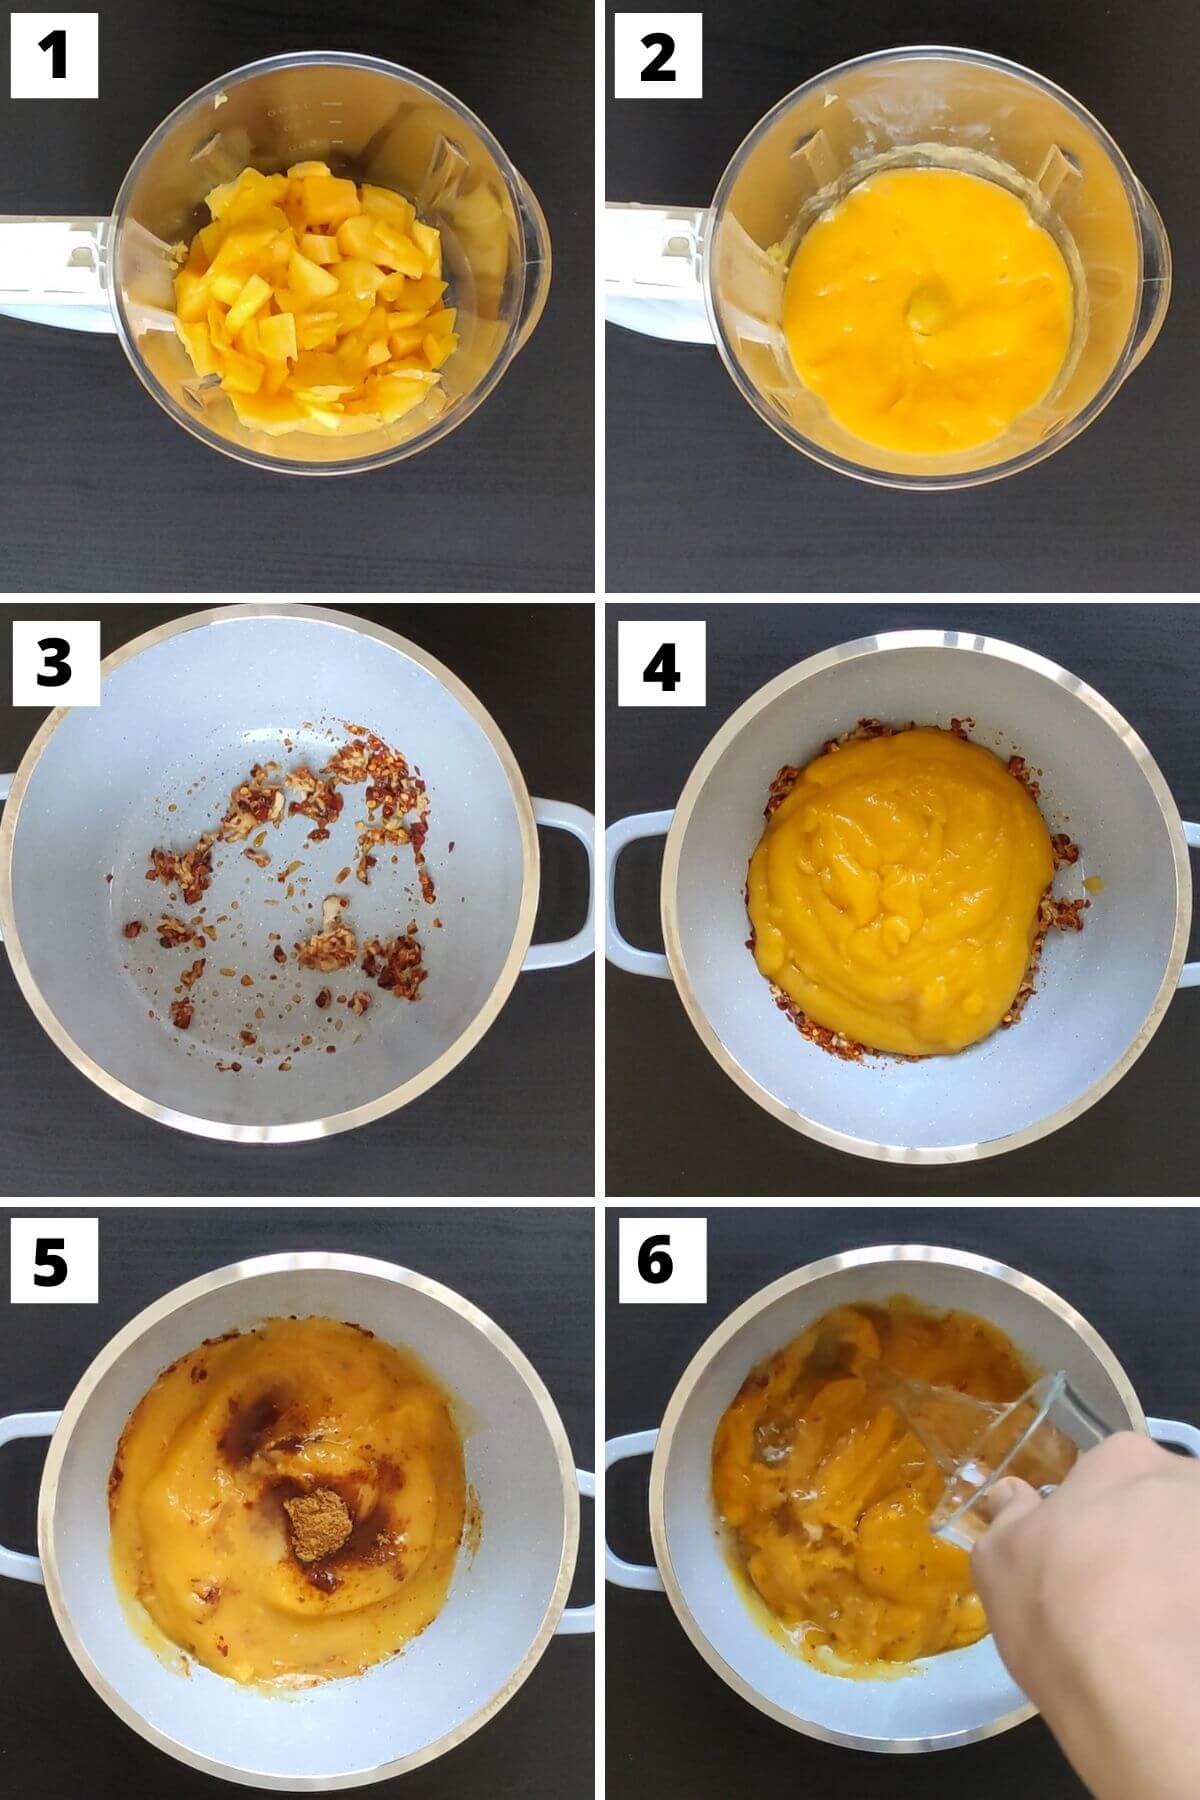 Steps to make mango chili sauce